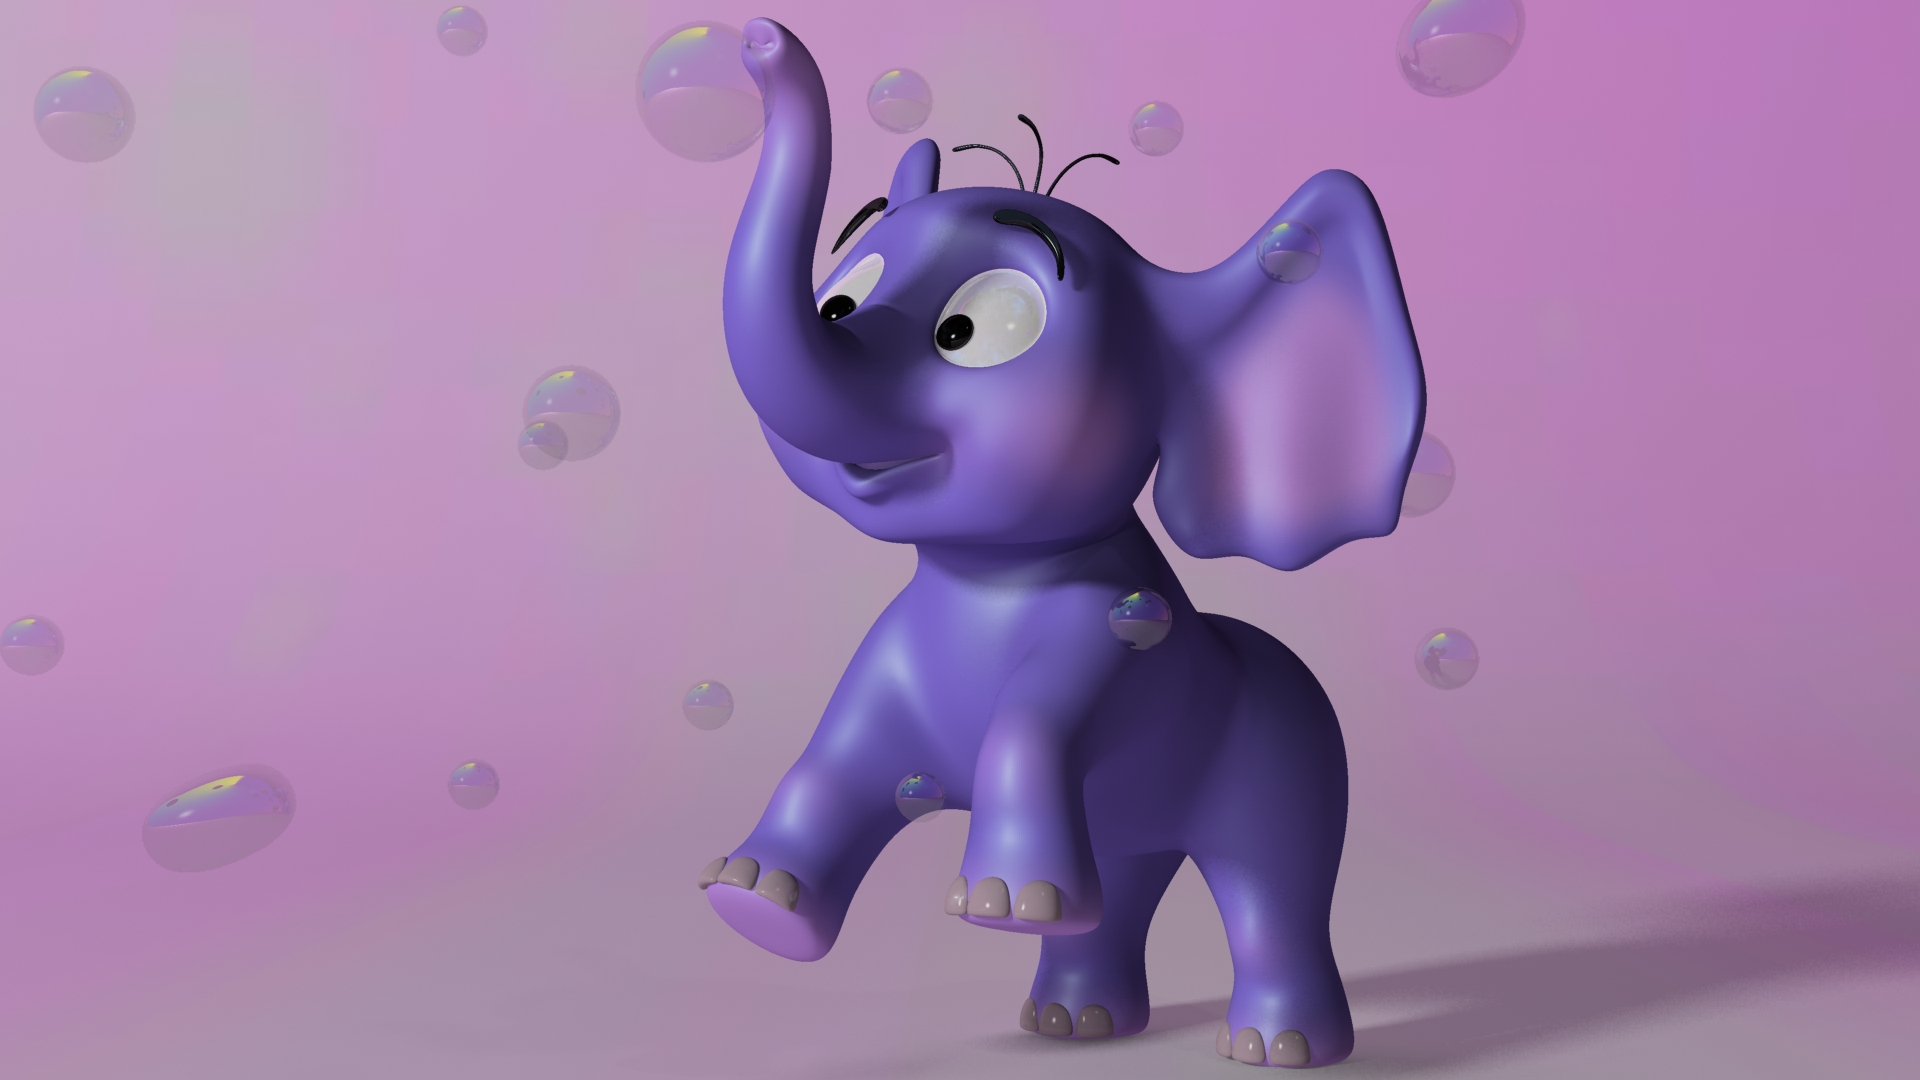  3D  Elephant  HD  3D  4k Wallpapers  Images Backgrounds  